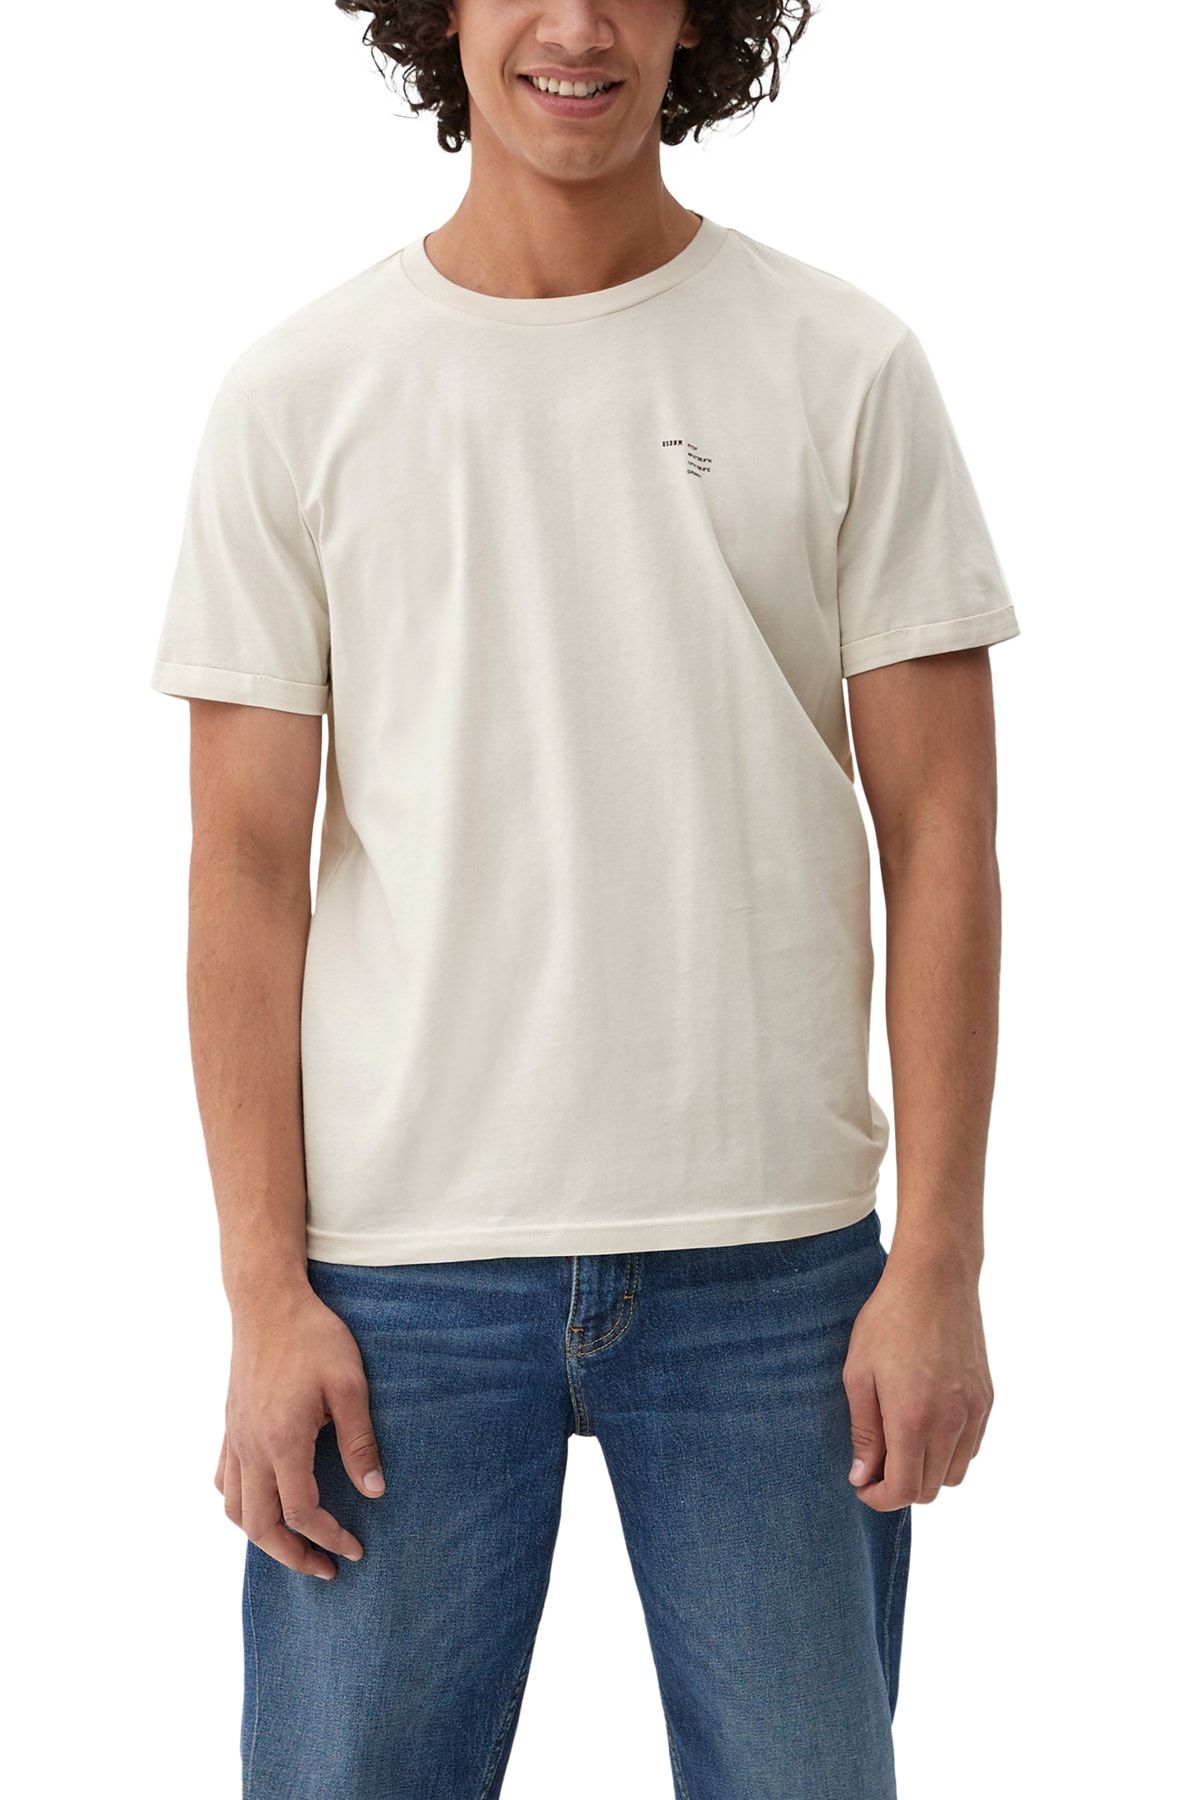 s.Oliver - T-Shirt by QS Trendyol - Regular - fit White